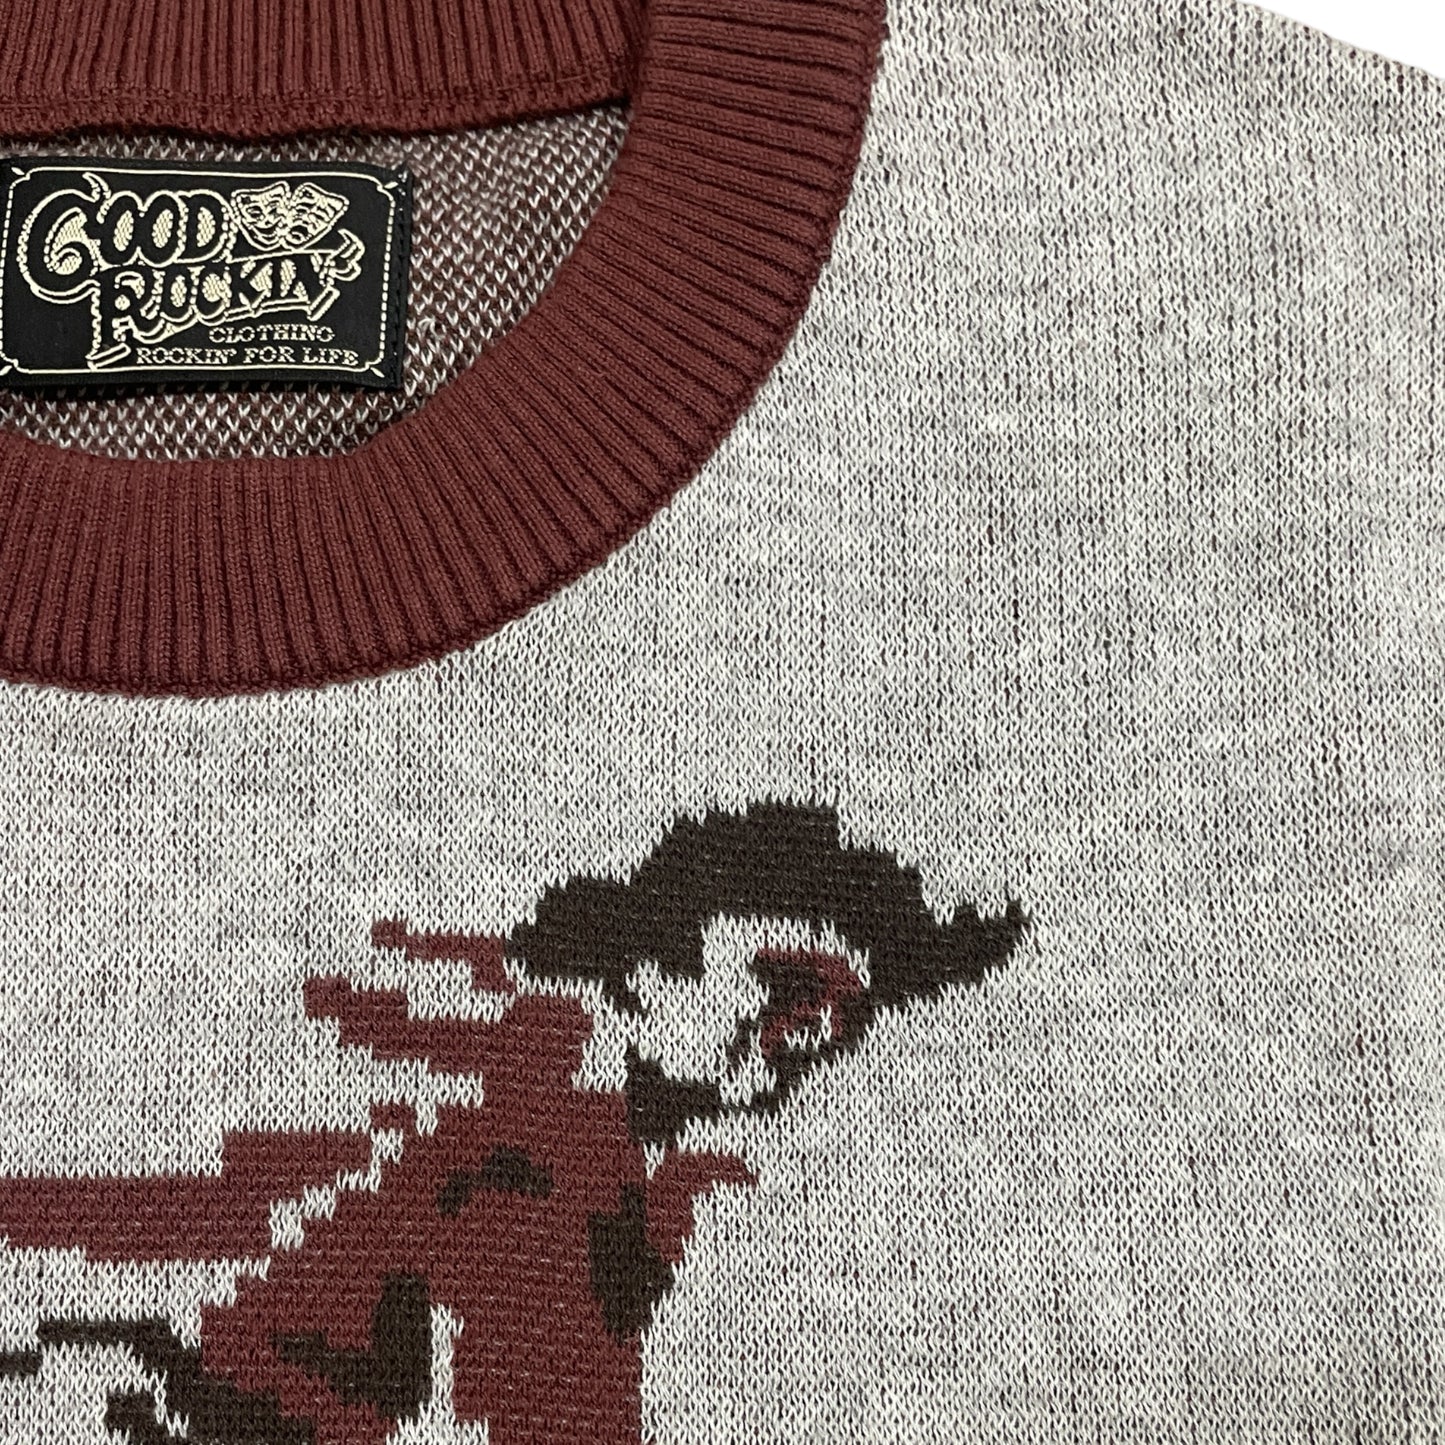 Vintage style summer sweater「Rodeo」/ヴィンテージスタイルサマーセーター「ロデオ」